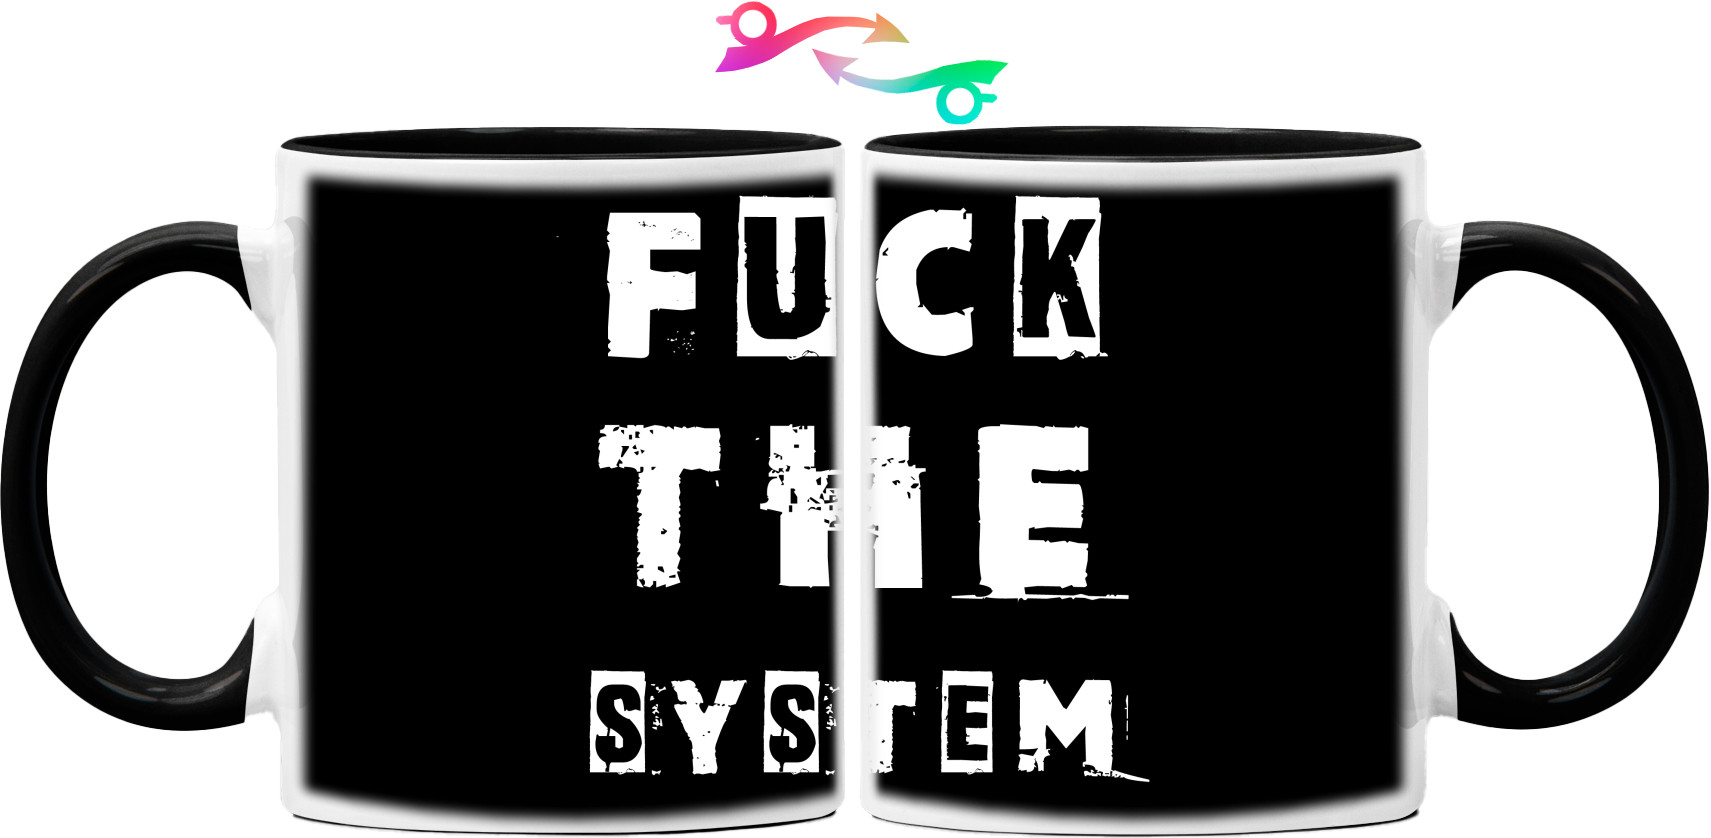 FUCK the system &#40;НАХ"Й СИСТЕМУ&#41;